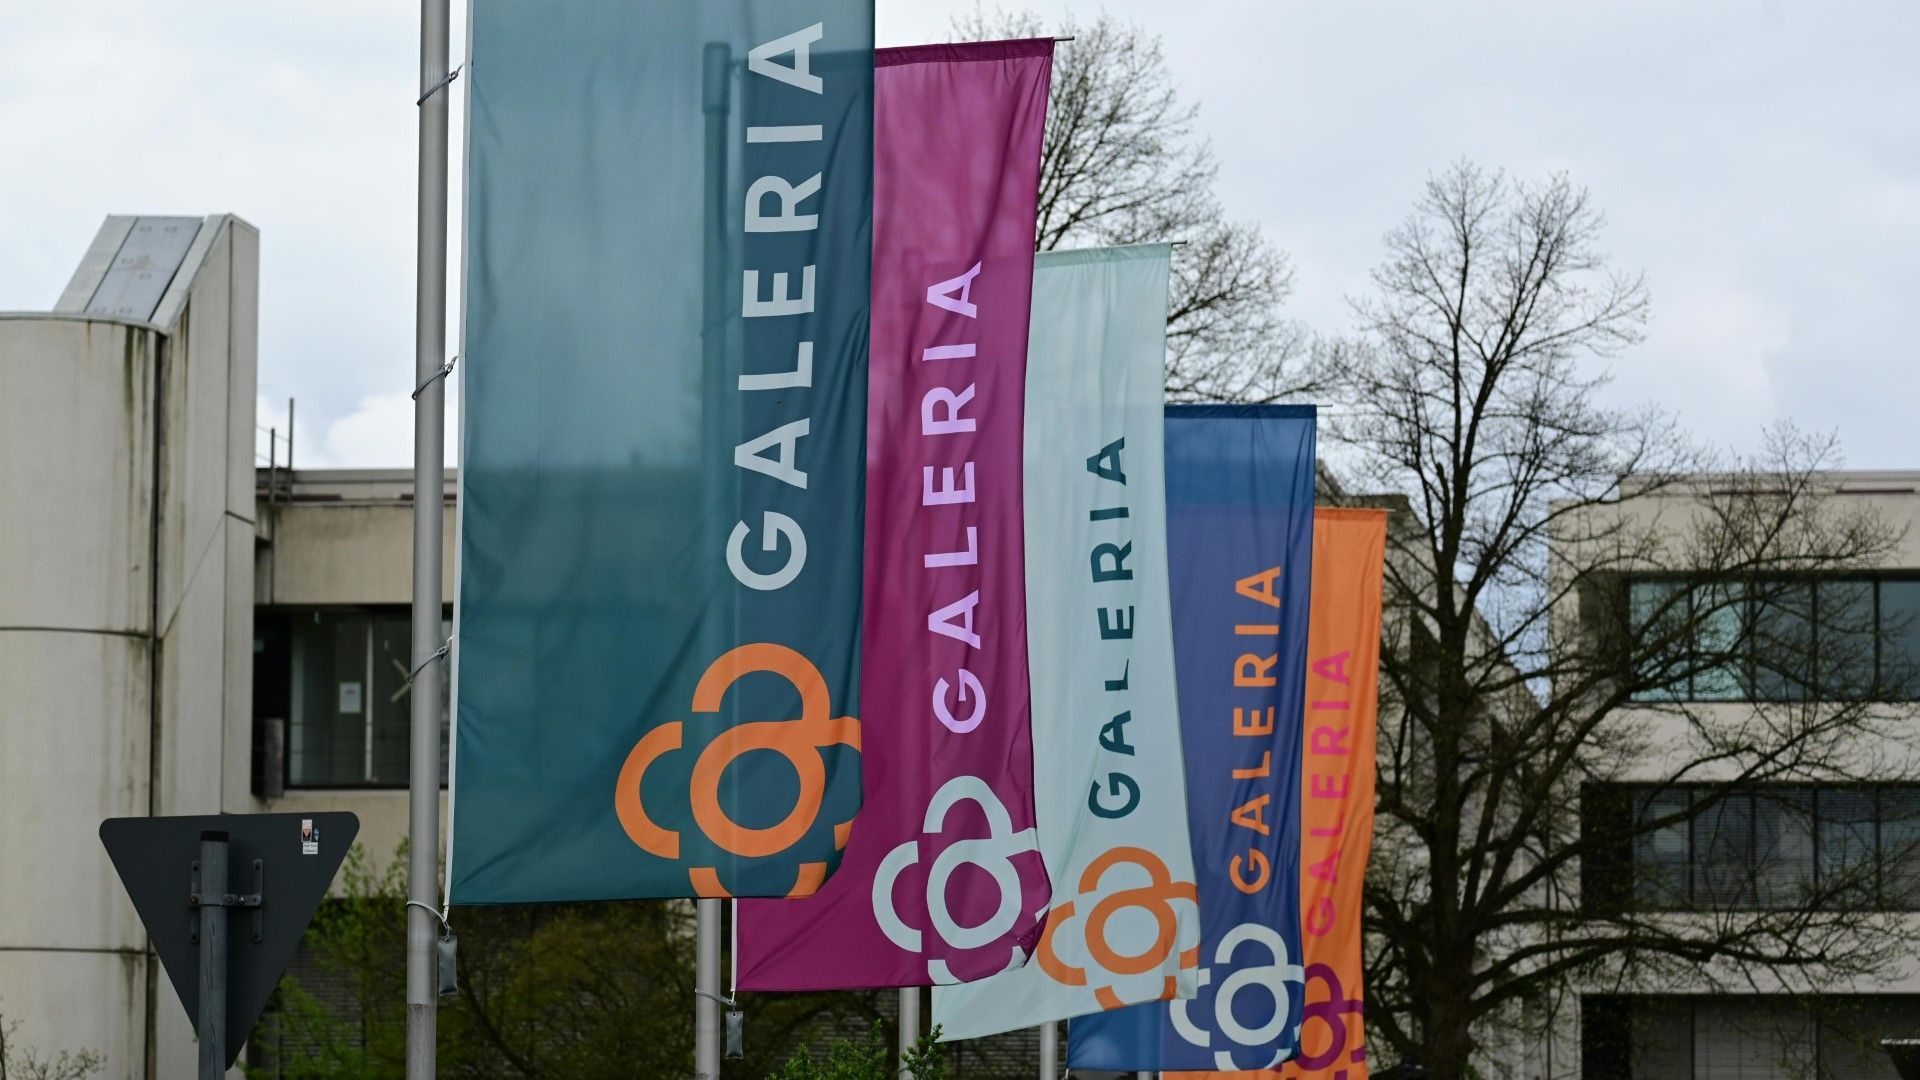 Galeria Karstadt Kaufhof: 16 stores and 1400 jobs to go